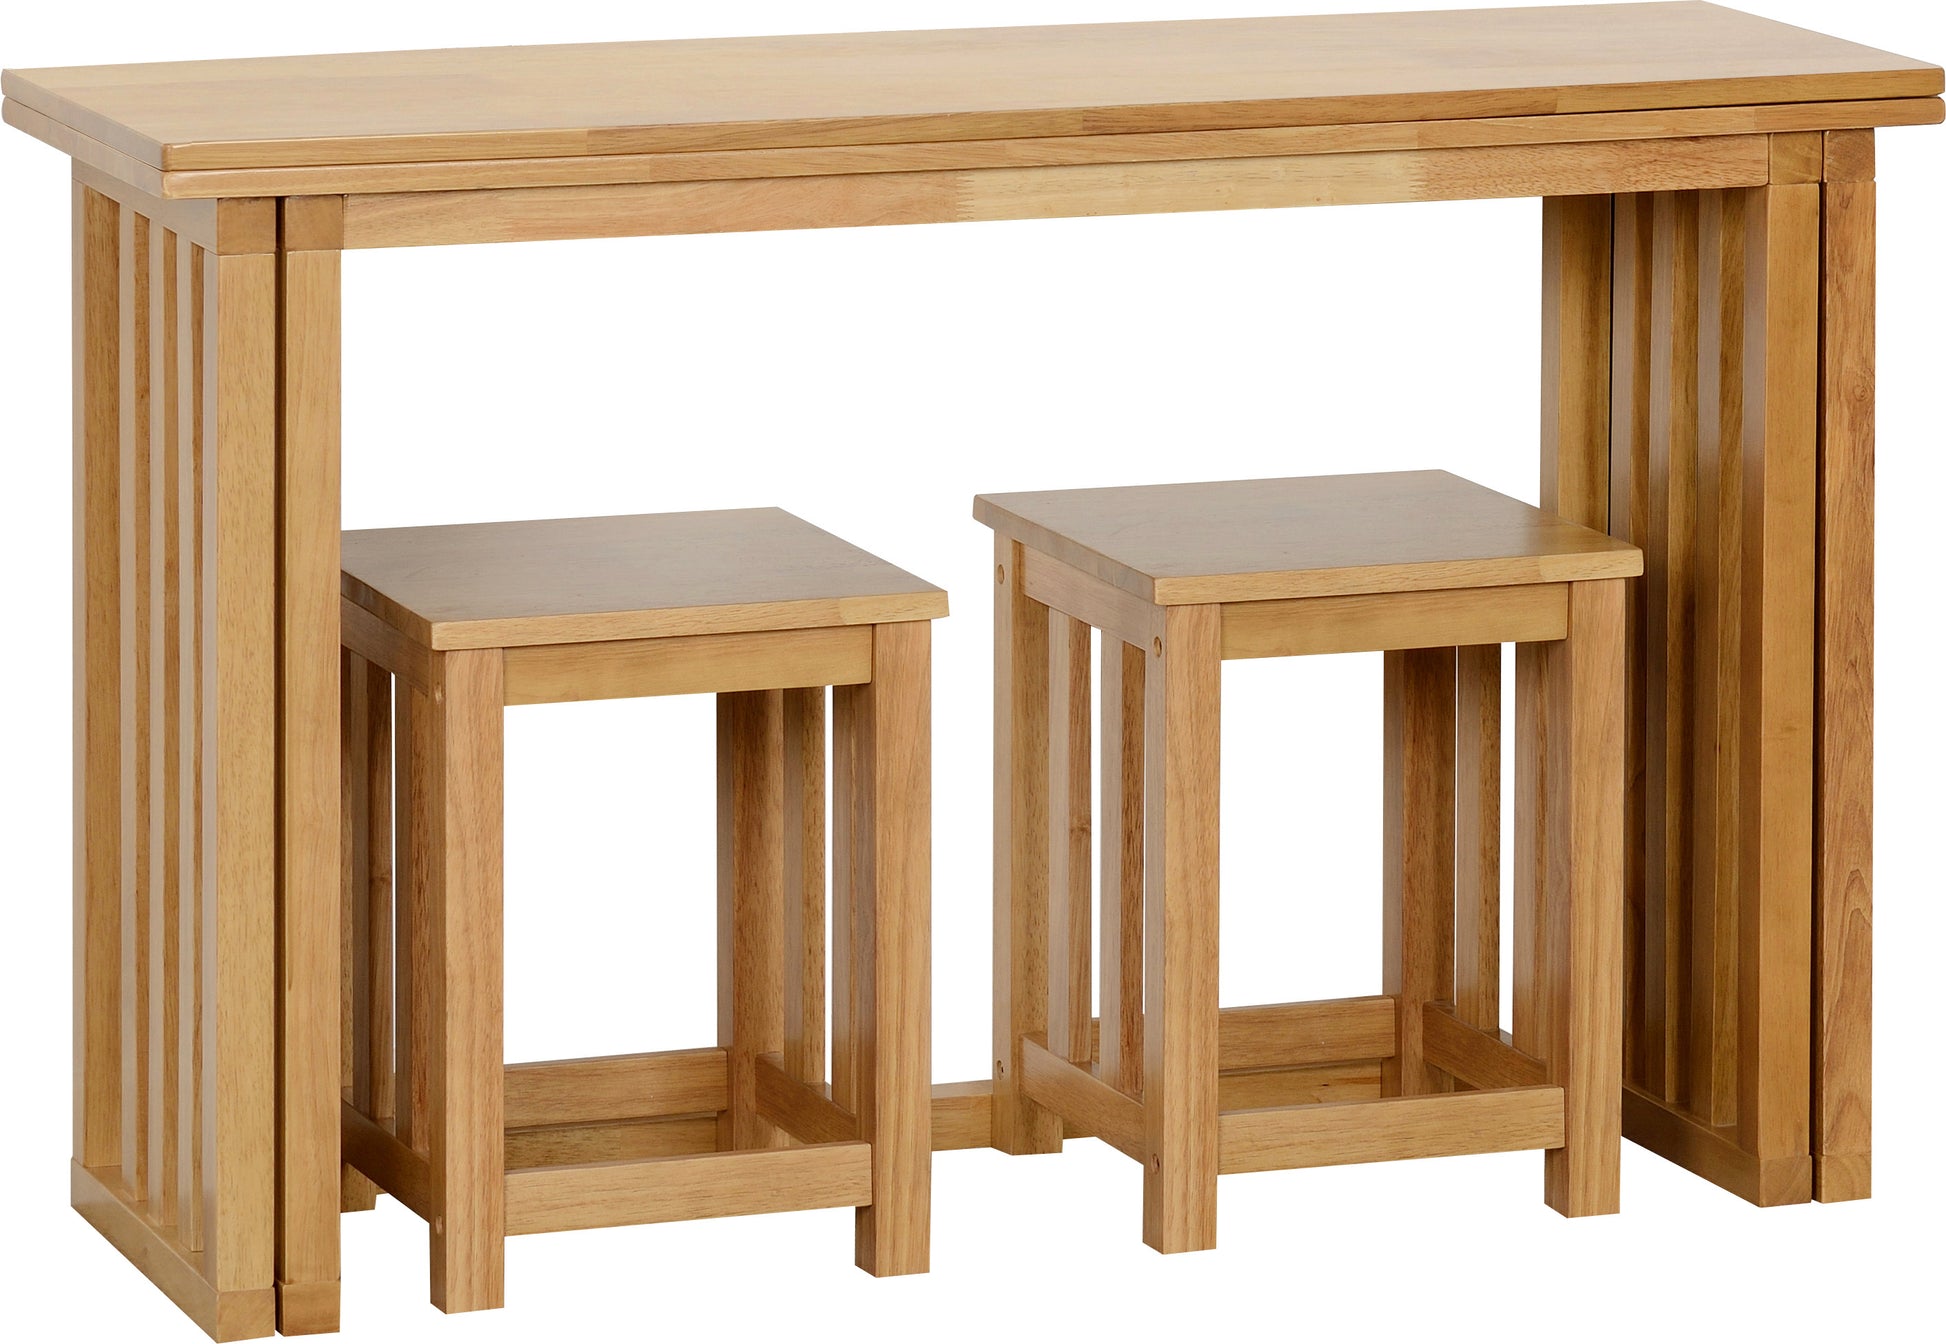 RICHMOND-STOOL-WITH-TABLE-111-OAK-VARNISH-400-402-102.jpg